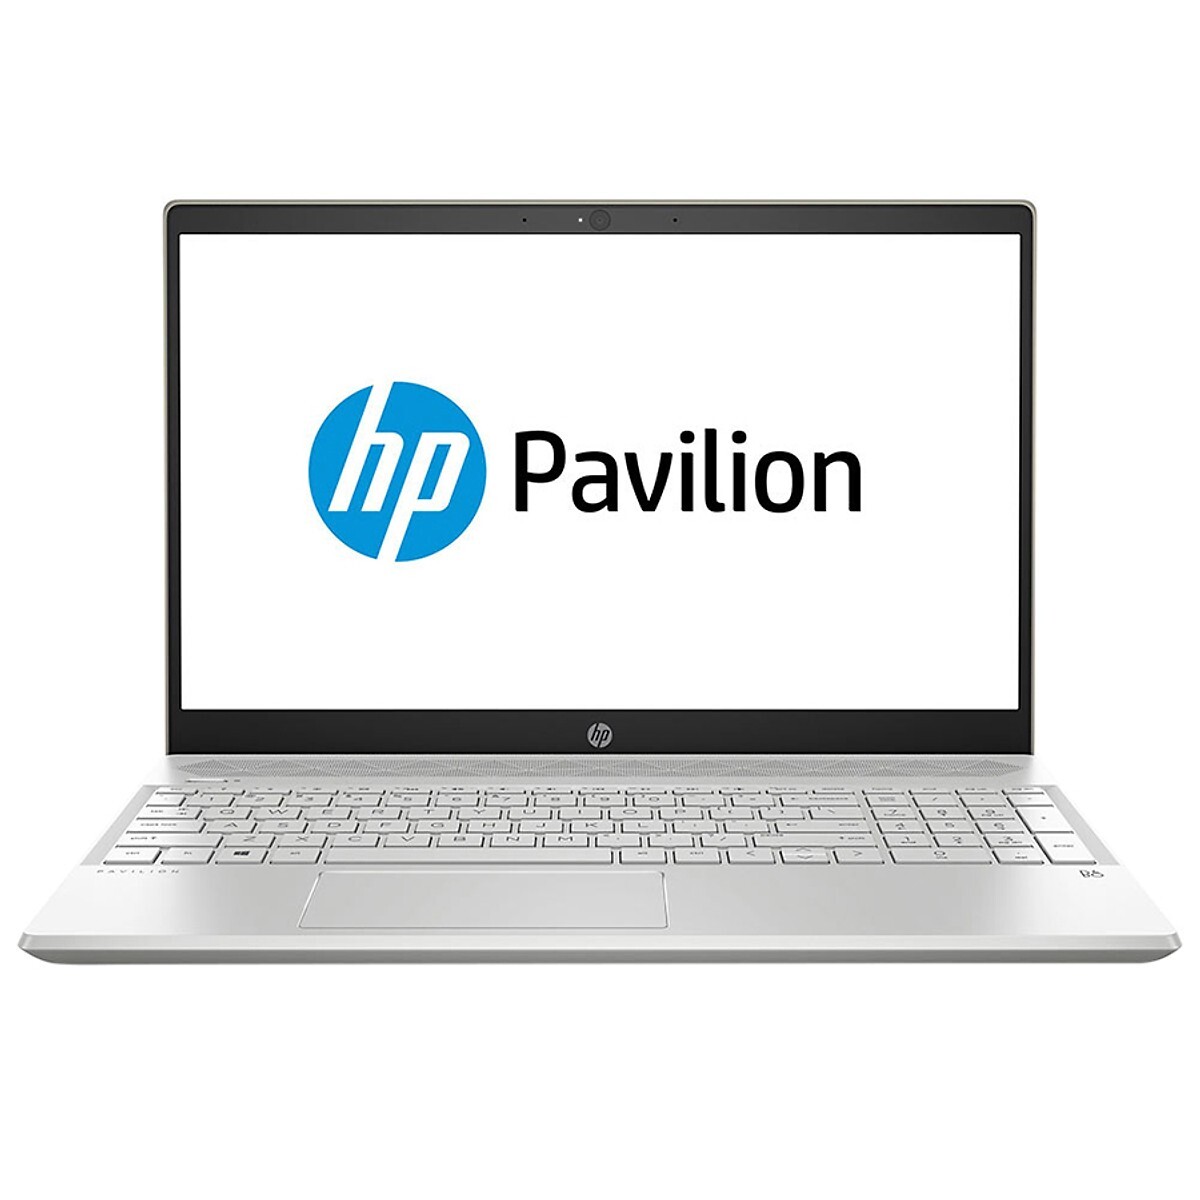 Laptop HP Pavilion 15-cs2059TX 6YZ07PA - Intel Core i7-8565U, 8GB RAM, SSD 256GB, Nvidia GeForce MX250 2GB GDDR5, 15.6 inch